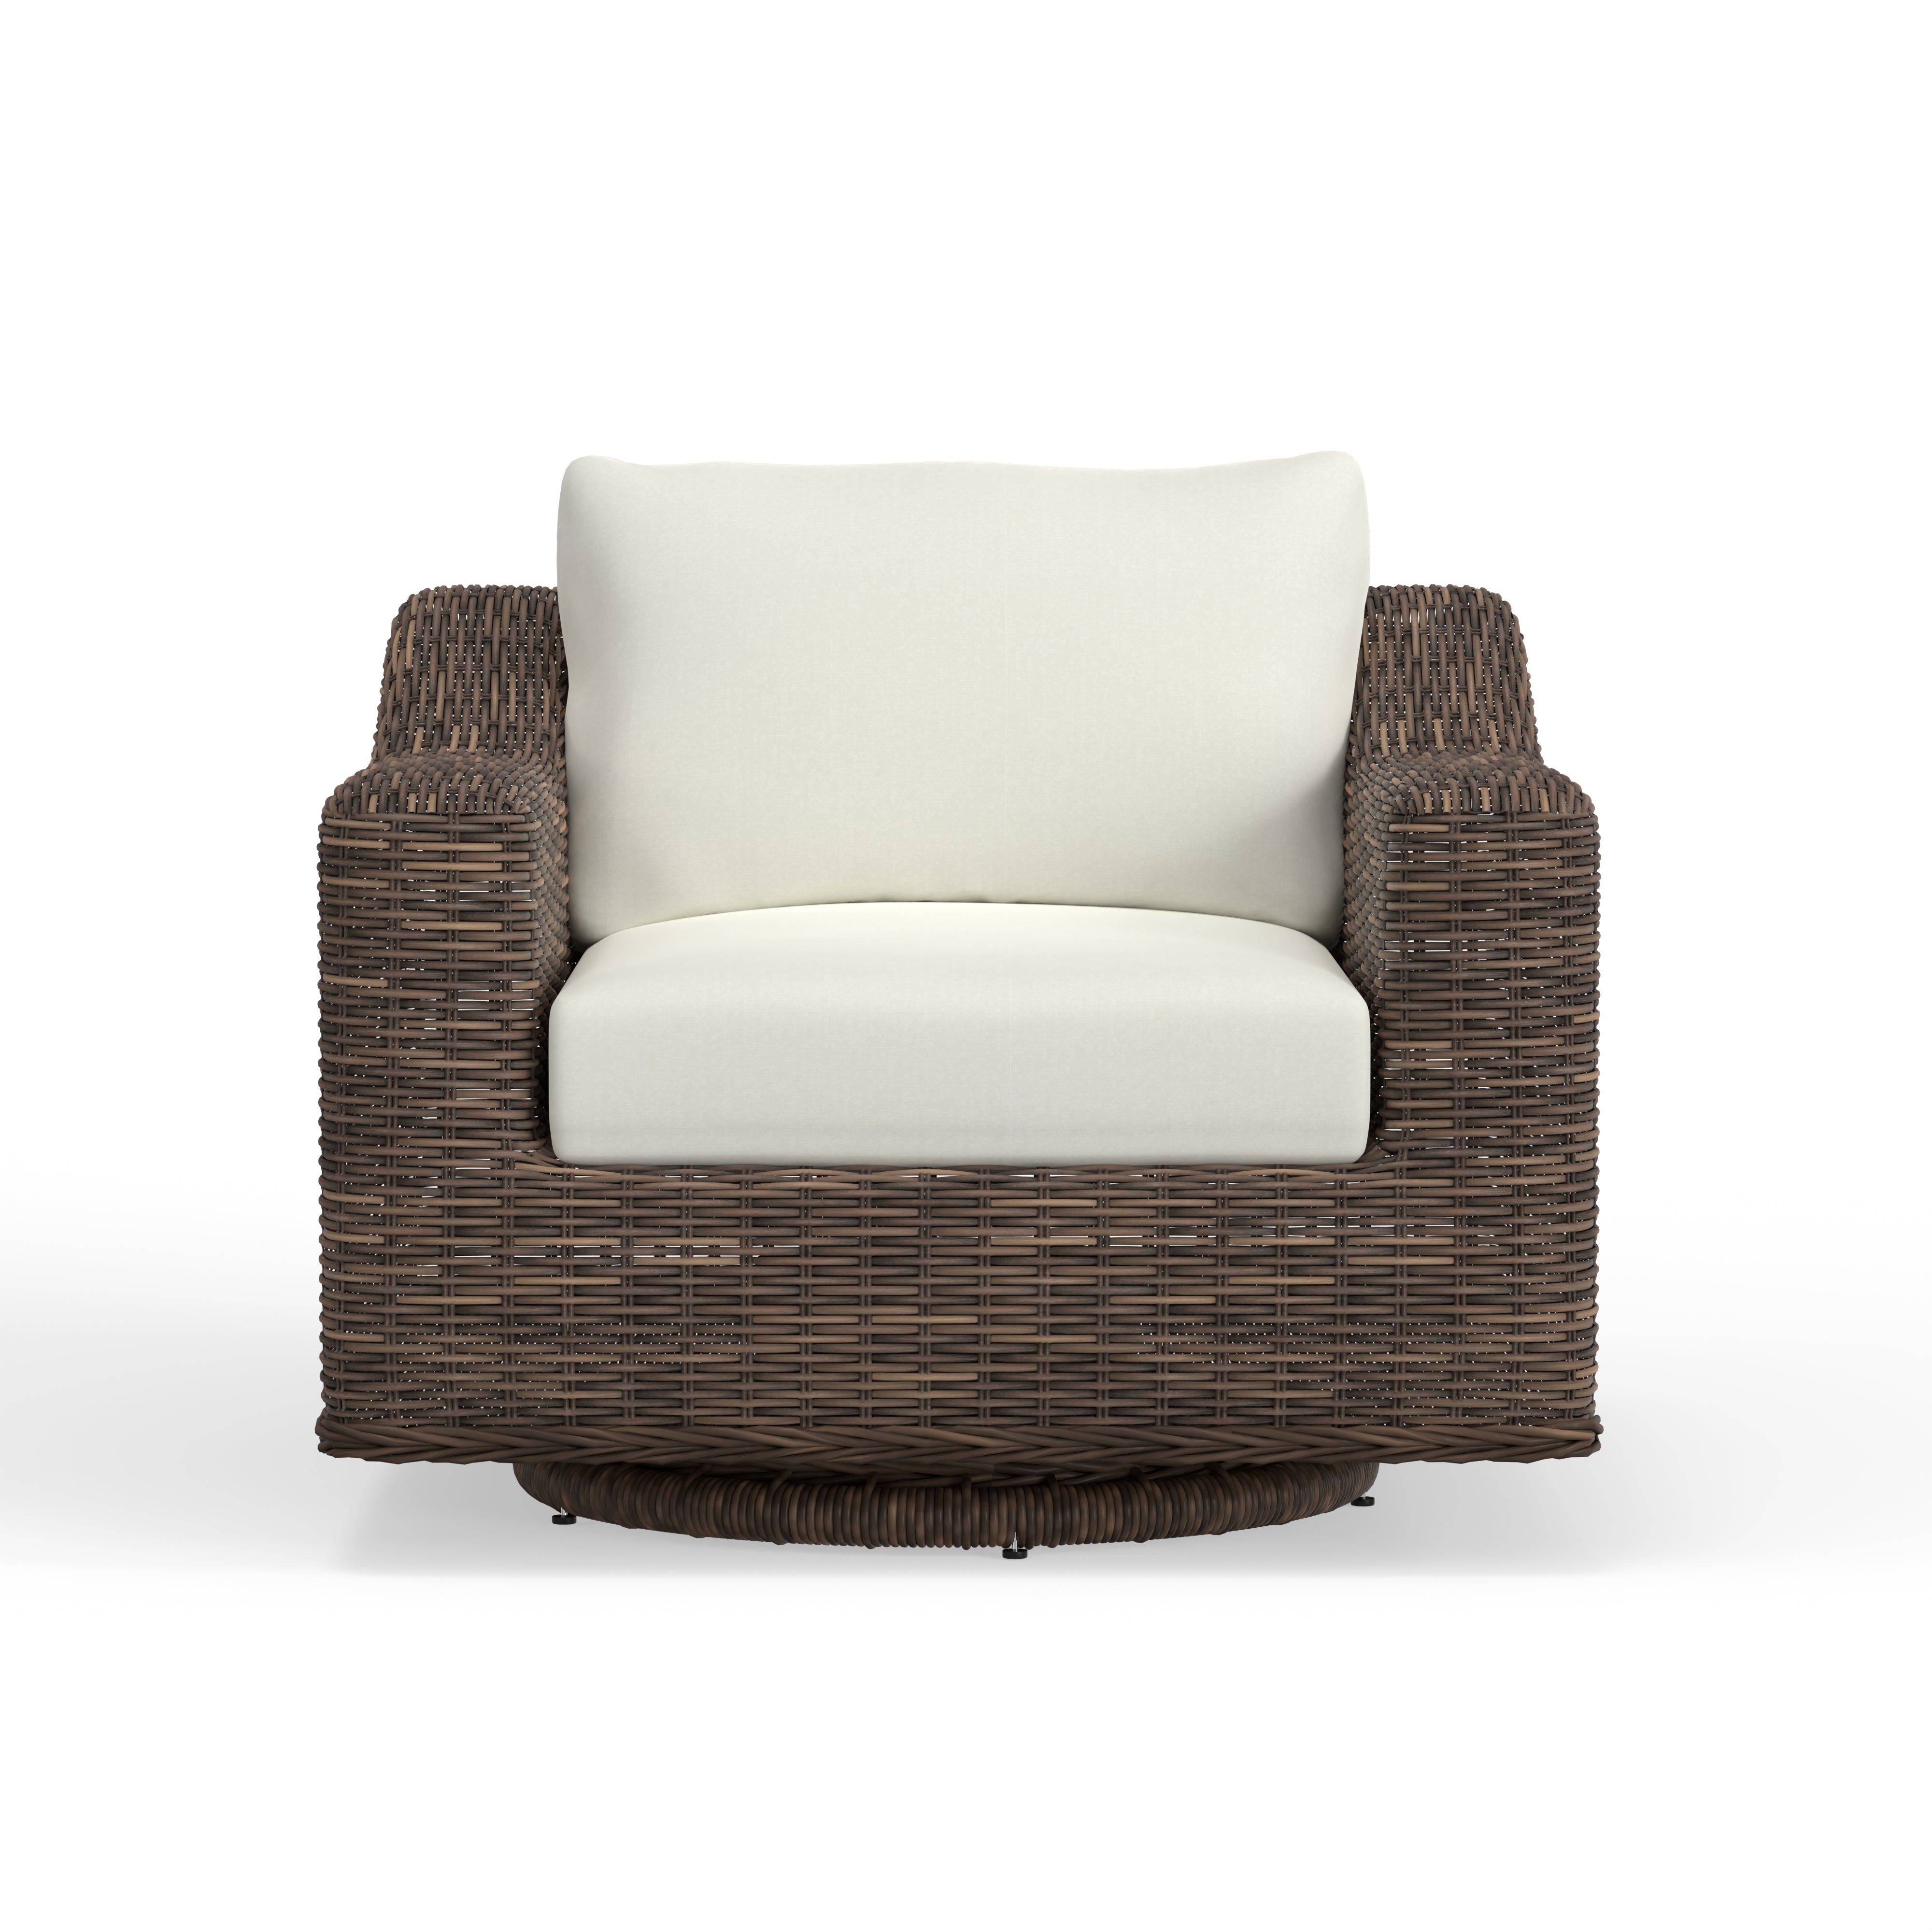 Newport Harbor Outdoor Swivel Club Chair - Patio Furniture Wicker